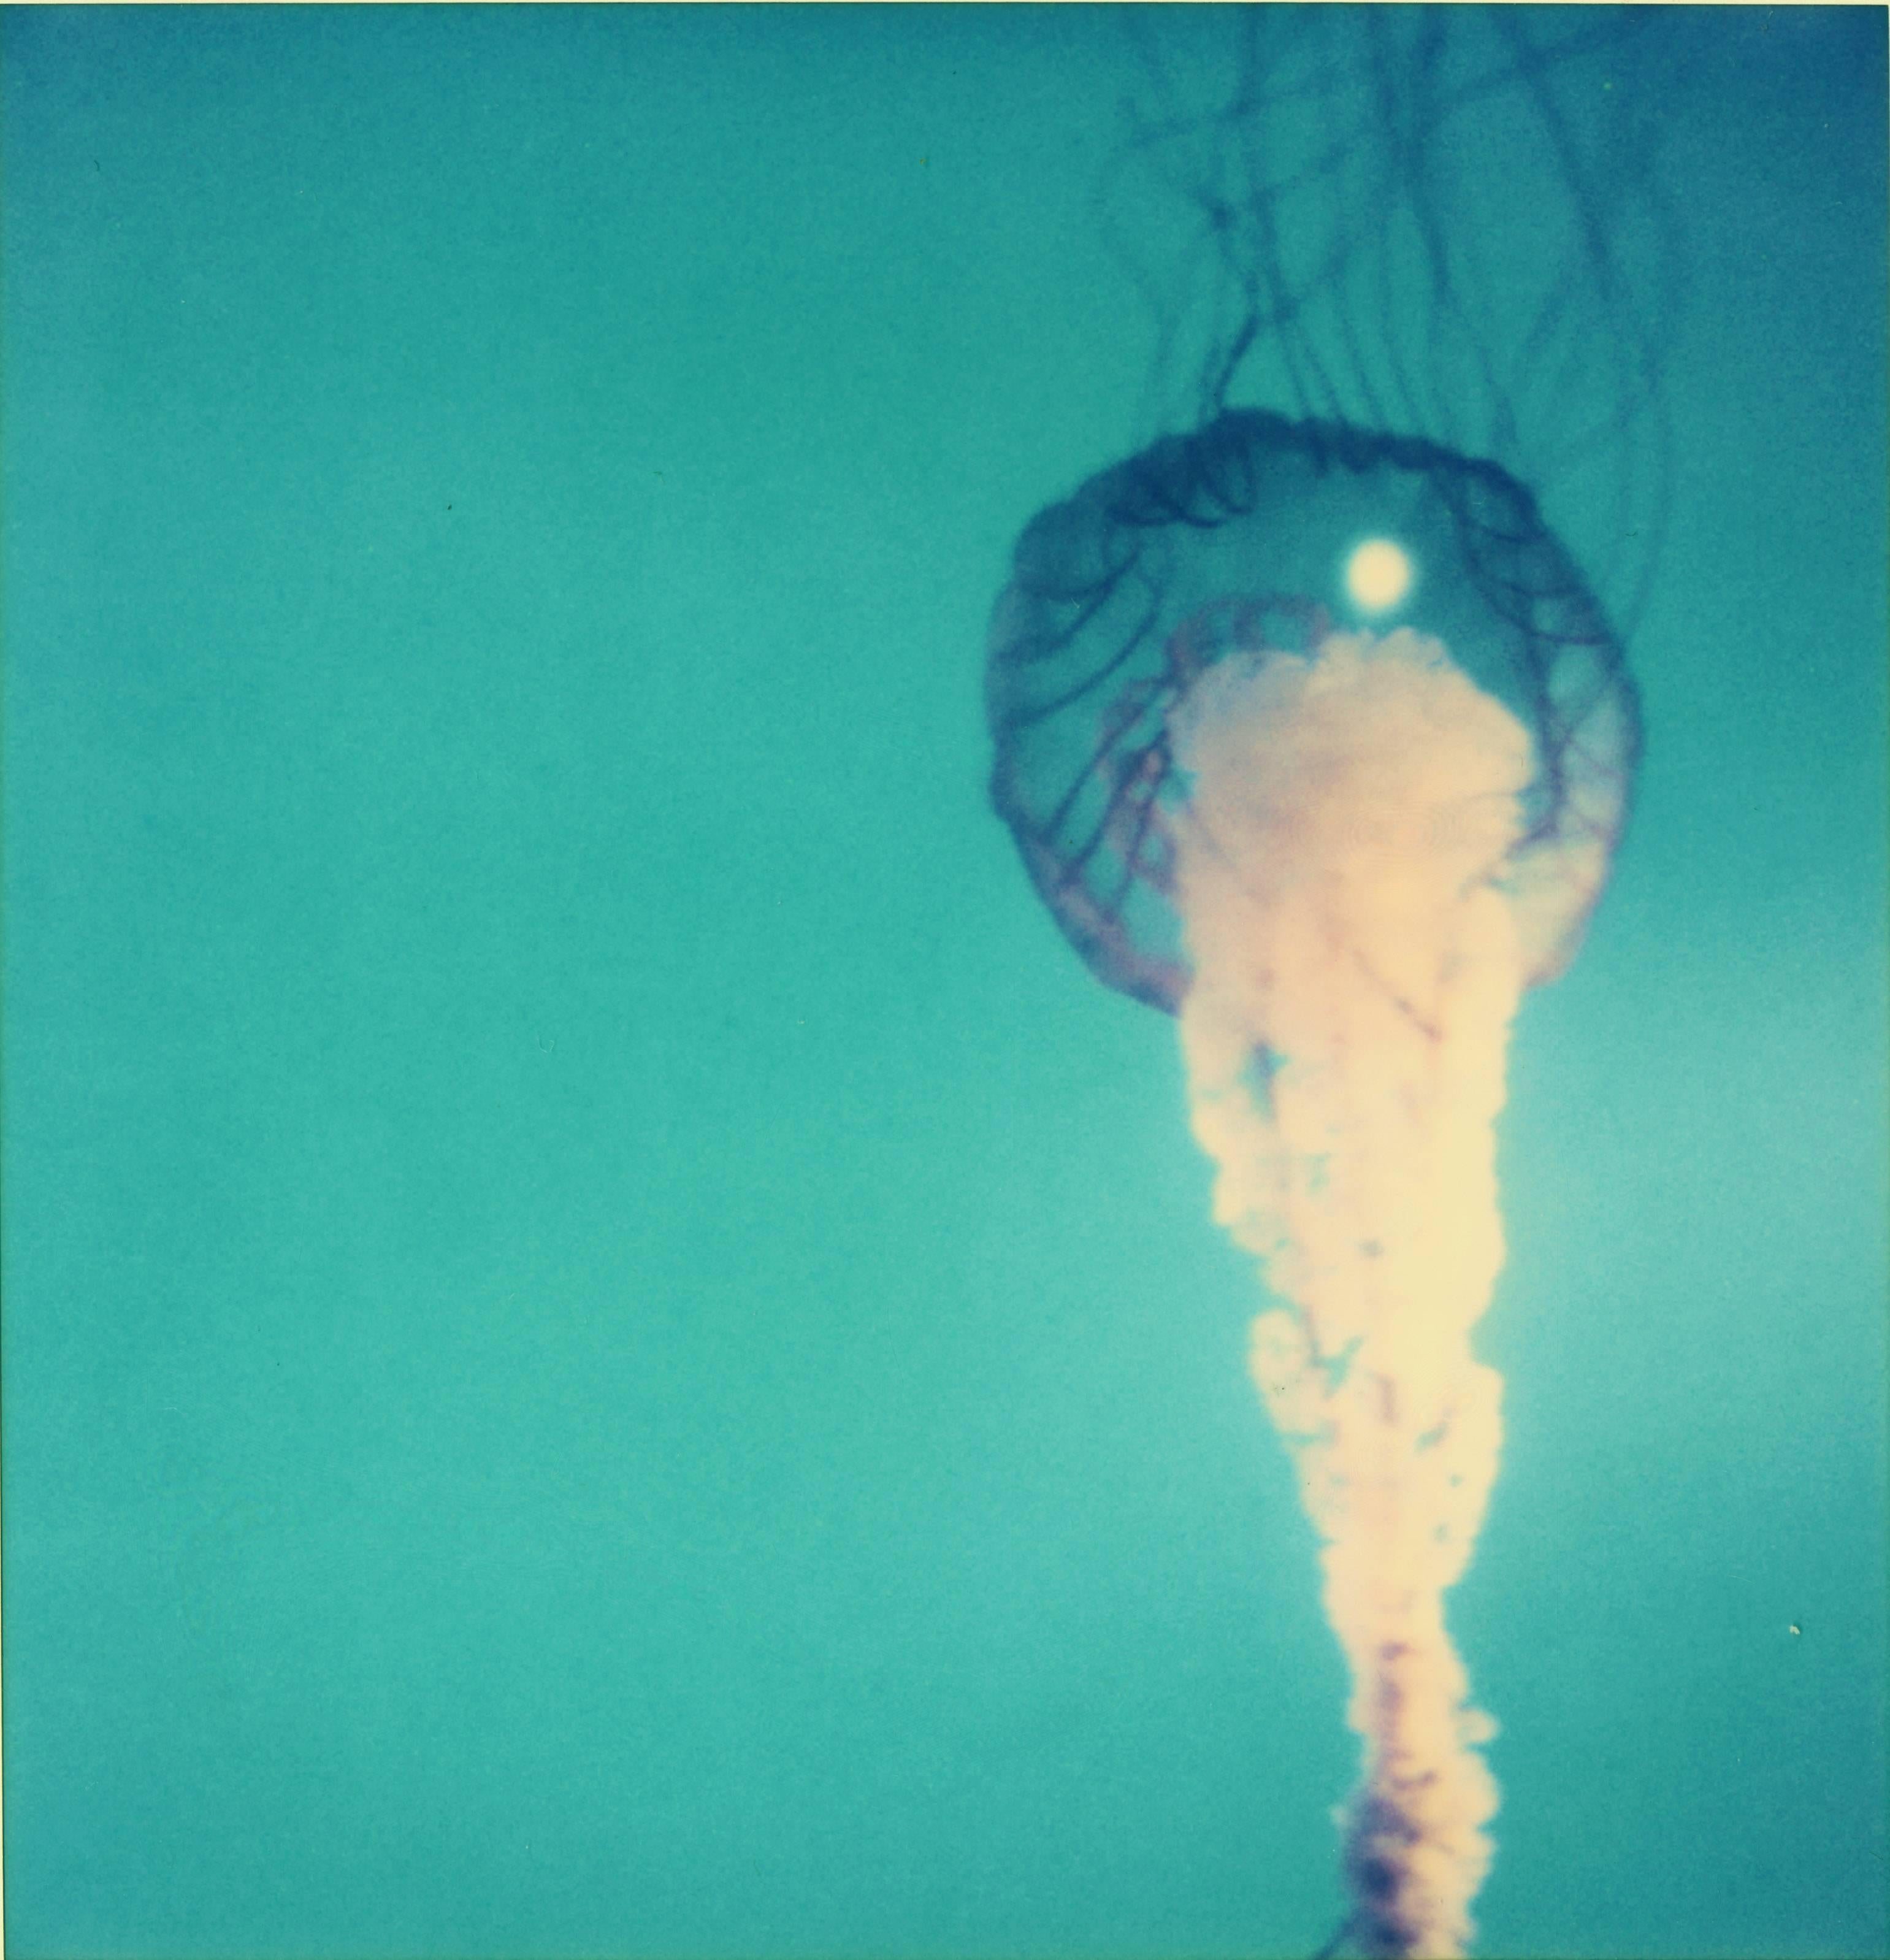 Still-Life Photograph Stefanie Schneider - Jelly Fish du film The Stay d'après un Polaroïd